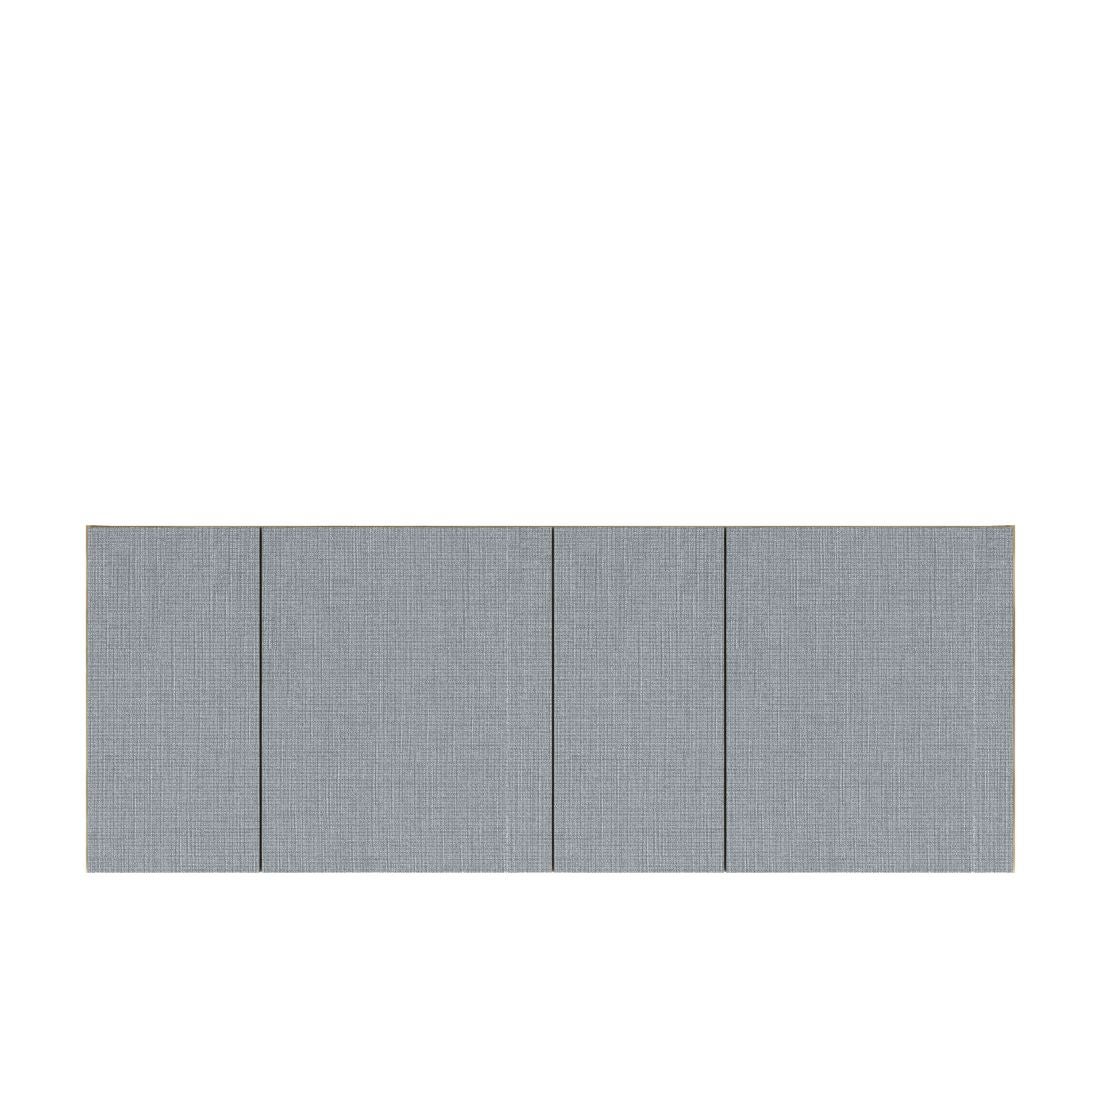 19140465-bricko-lighting-storage-organization-storage-furniture-01